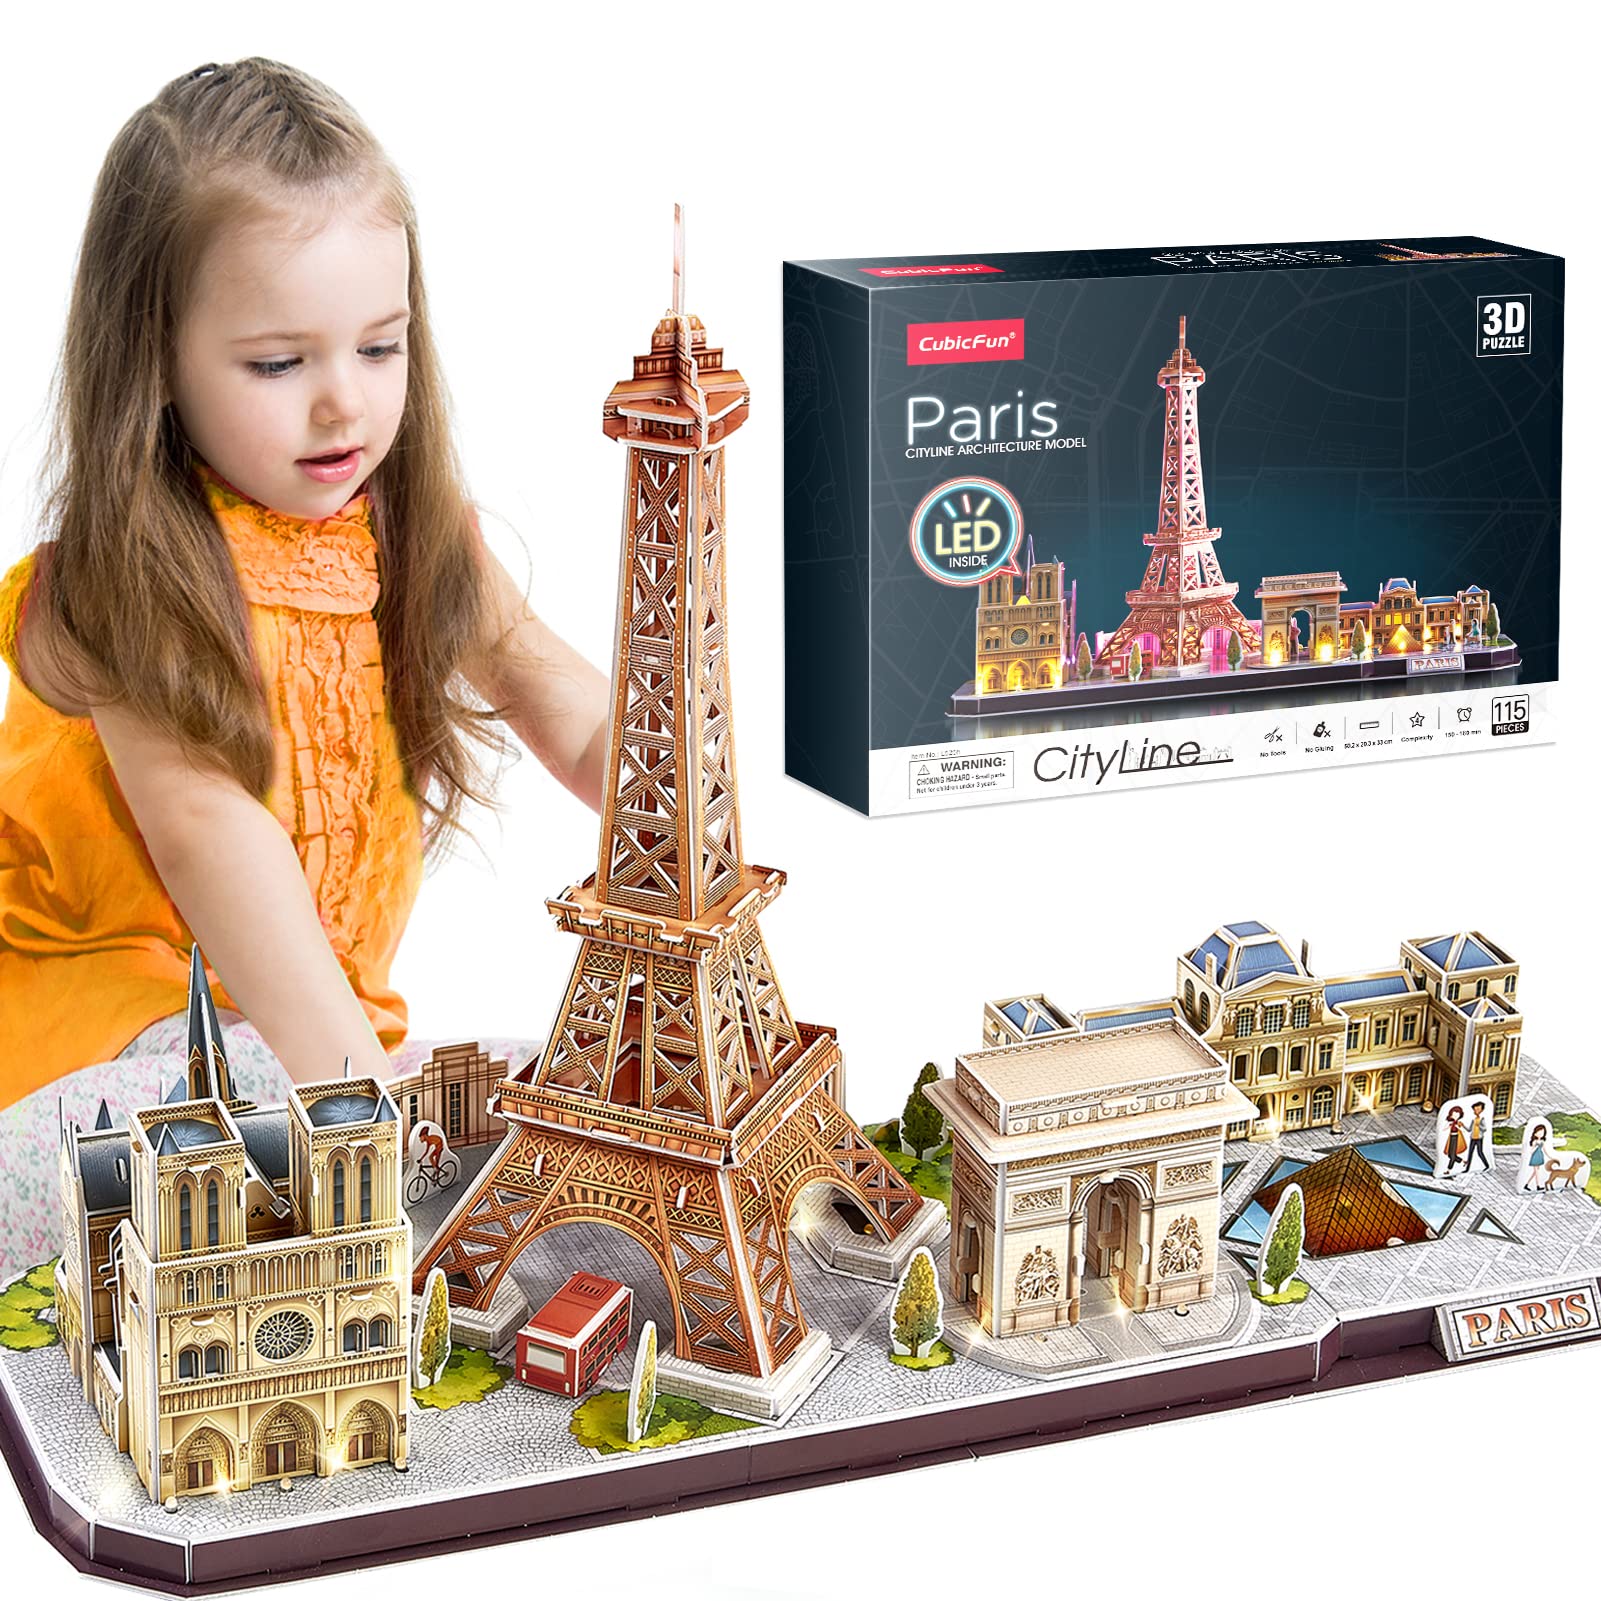 cubicFun 3D Puzzles for Kids Ages 8-10 LED Paris cityline, Arts and crafts for Kids Ages 8-12 STEM Projects for Kids Ages 8-12 g